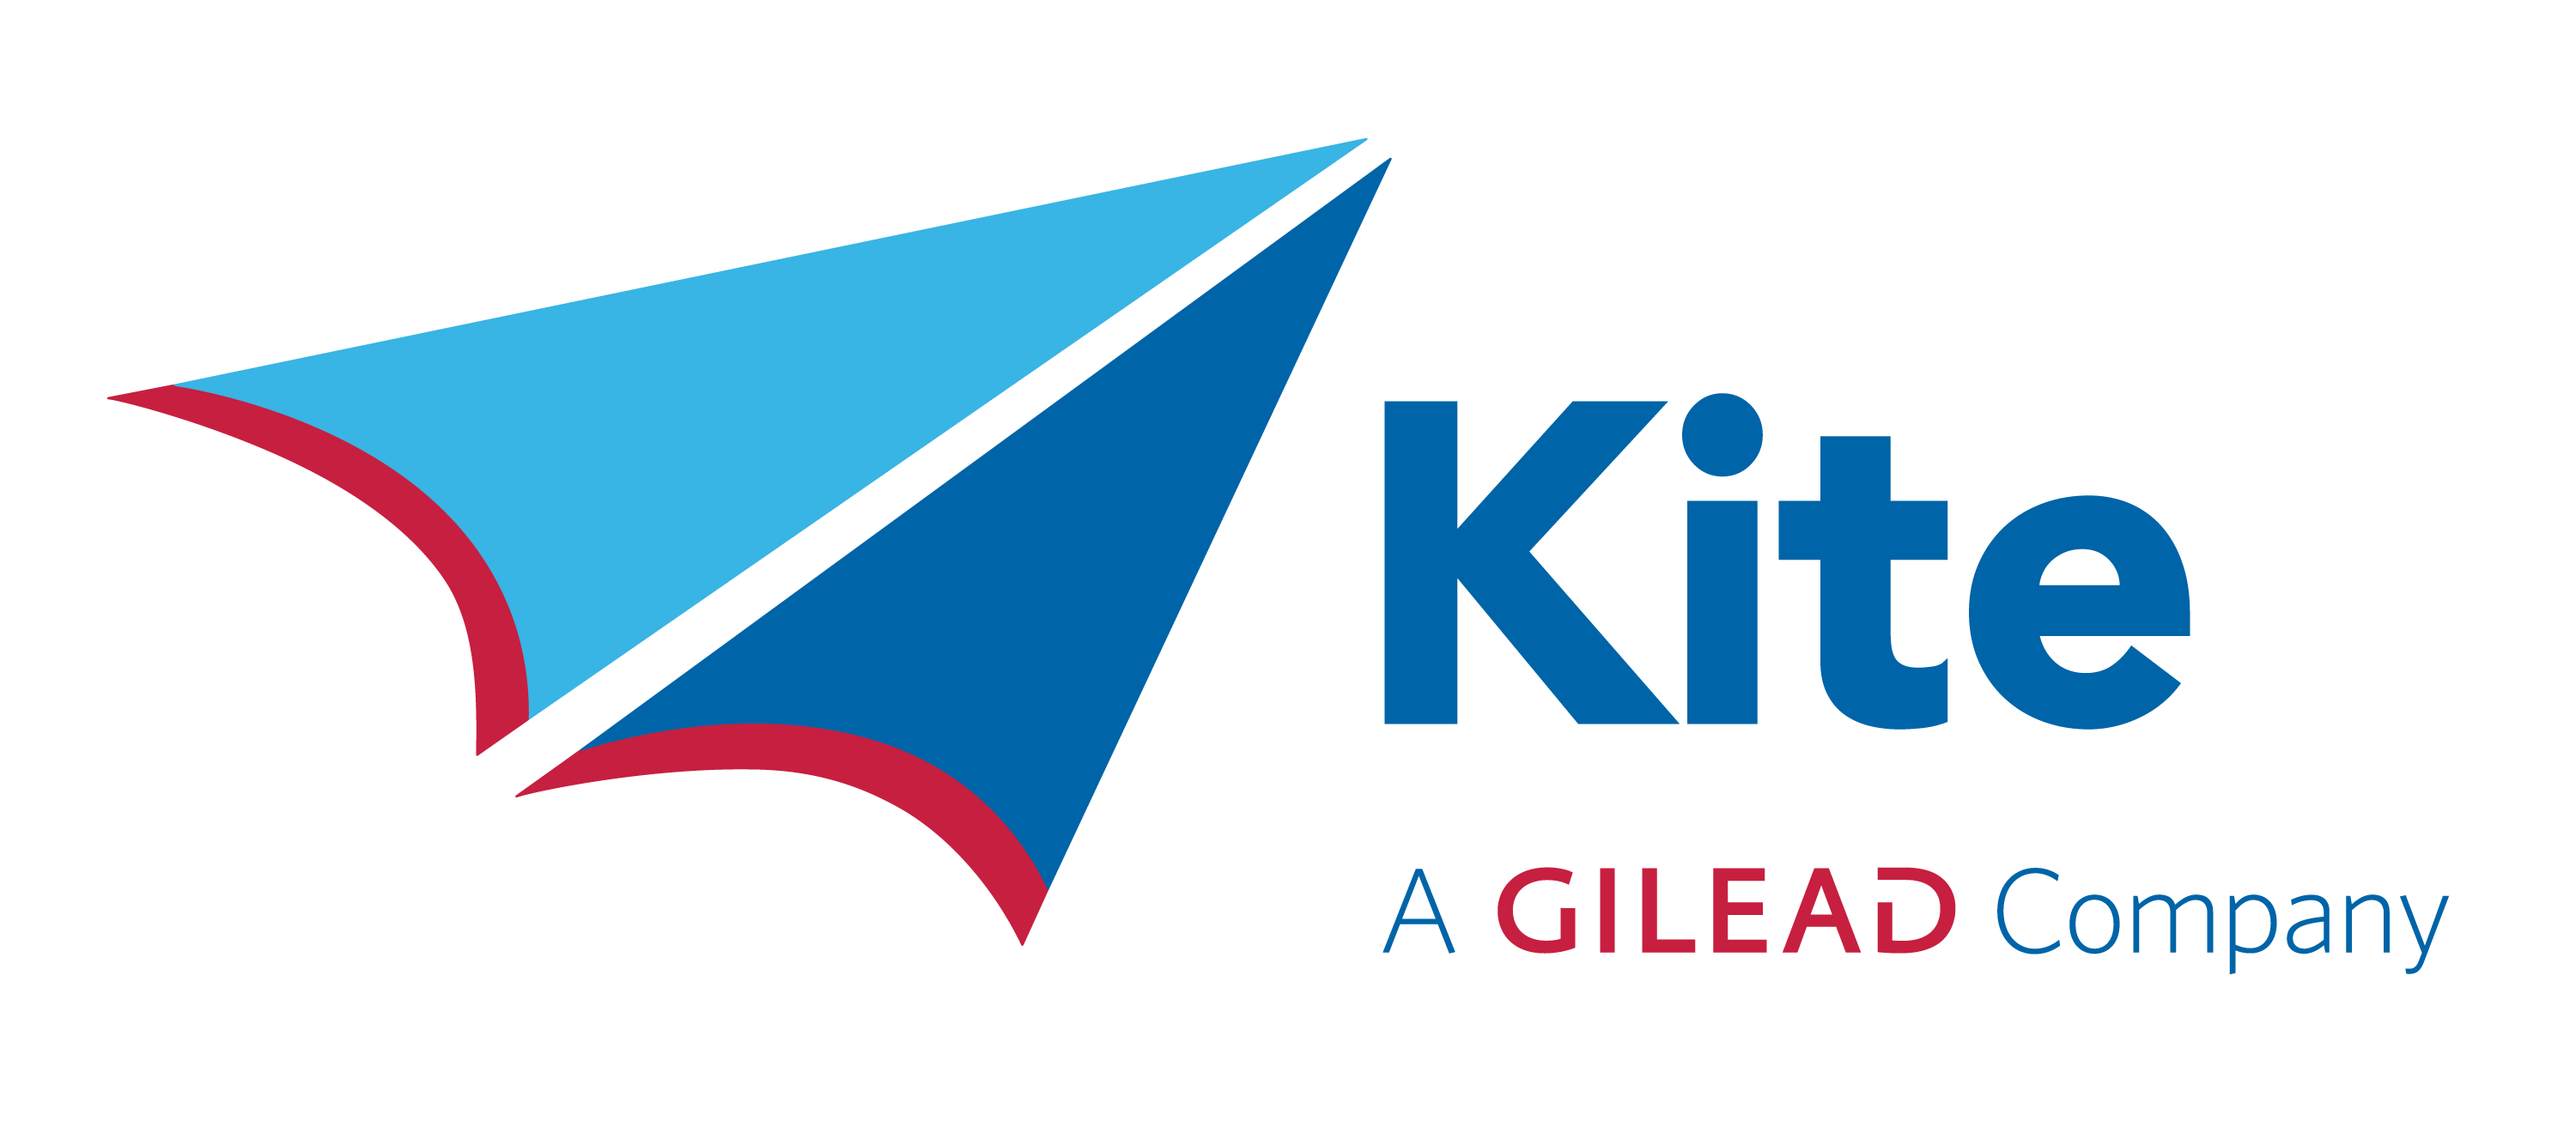 Kite - a Gilead Company logo (large)